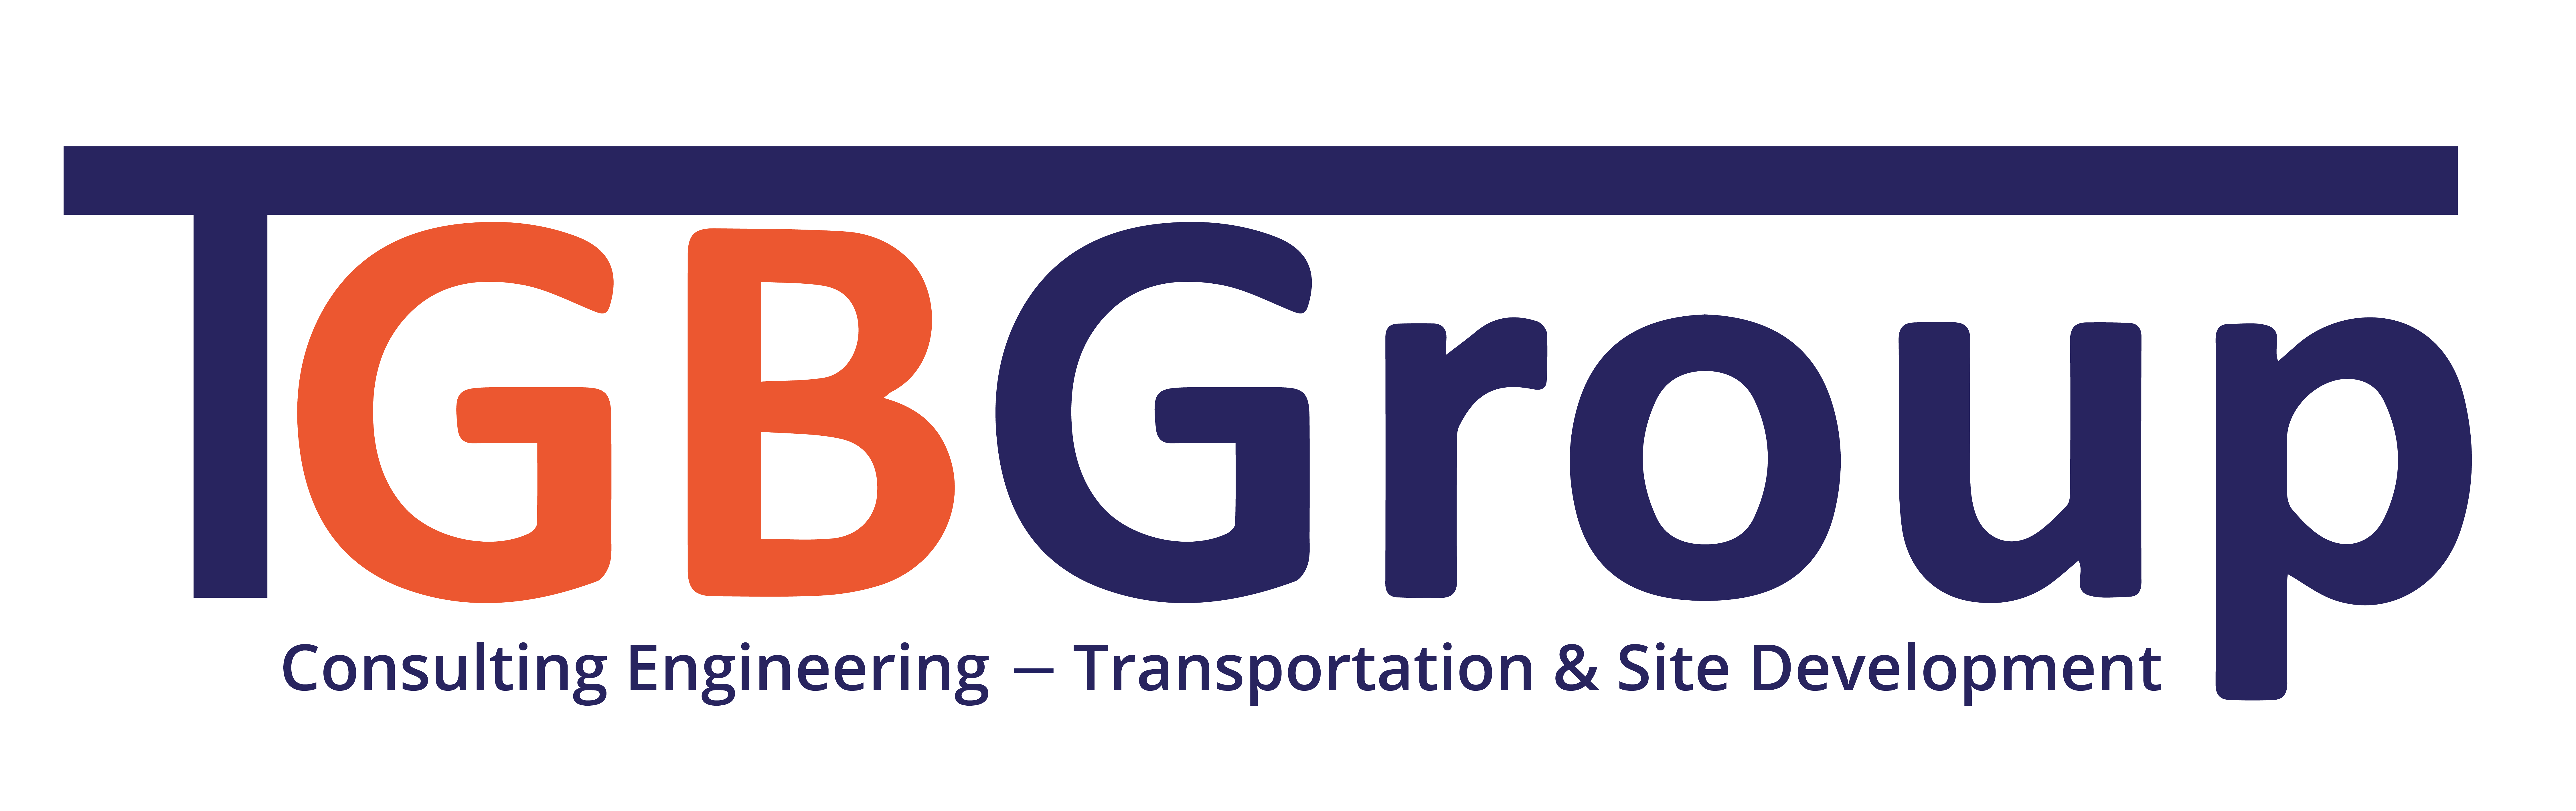 TGB Logo - Website Development for TGB Group by N&C - Nelson & Co.